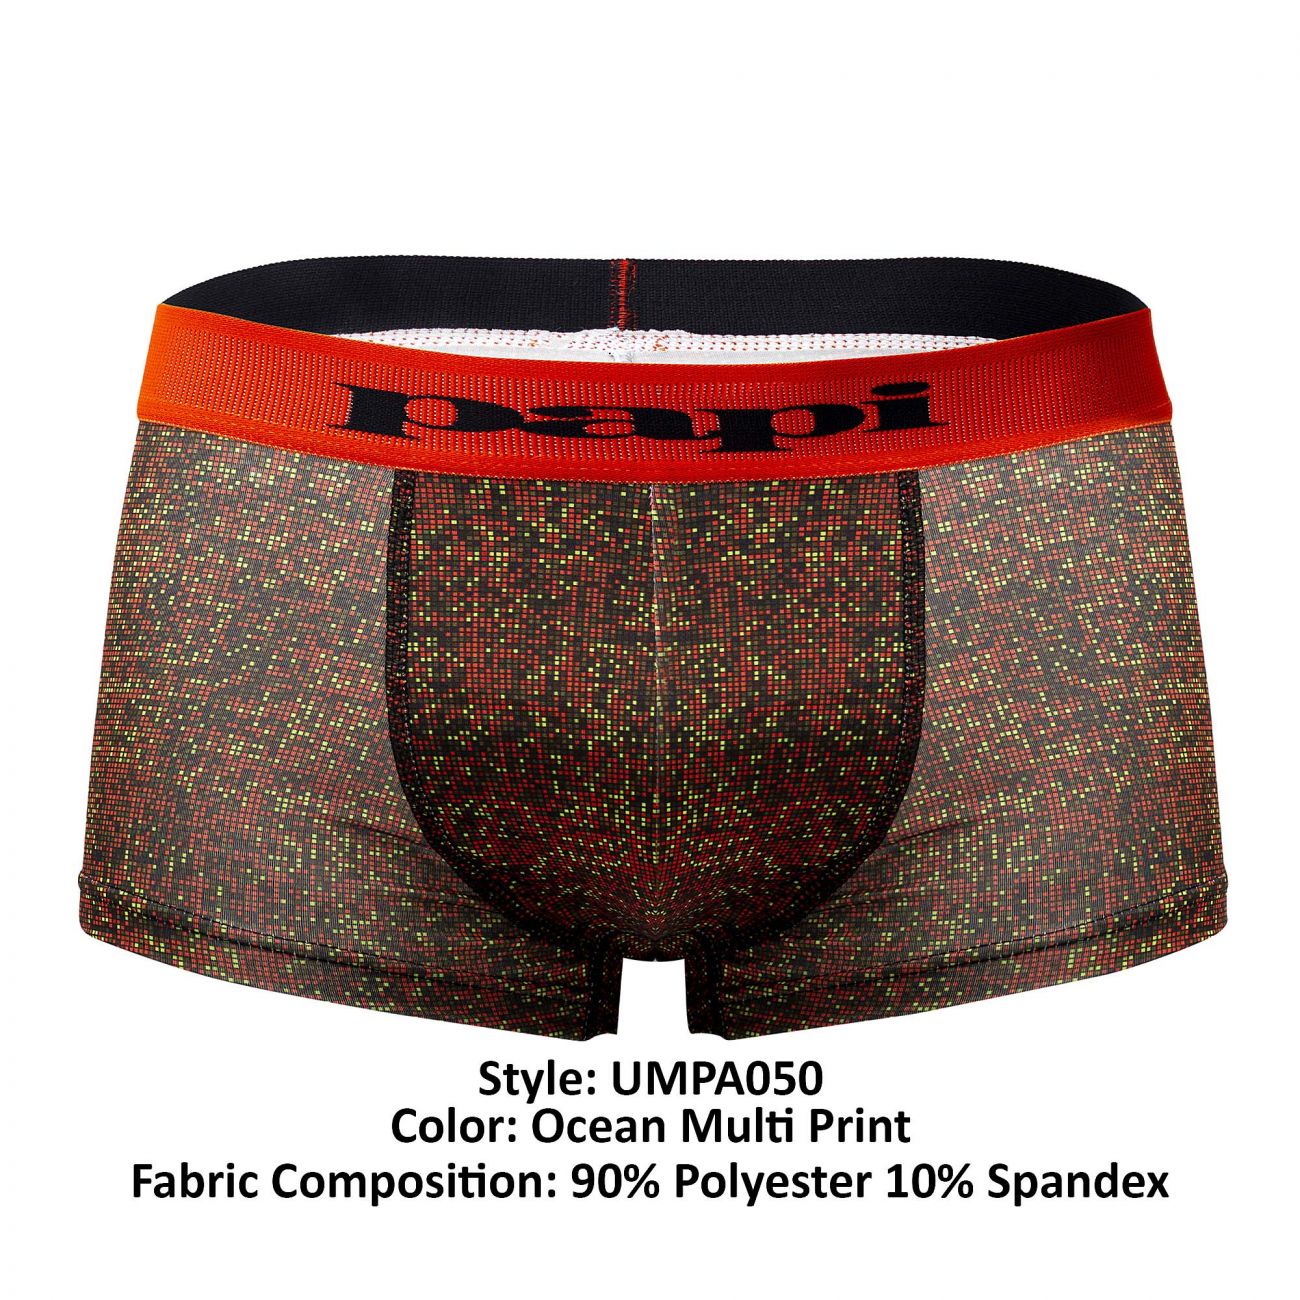 Papi UMPA050 Fashion Microflex Brazilian Trunks Orange Pixel Print